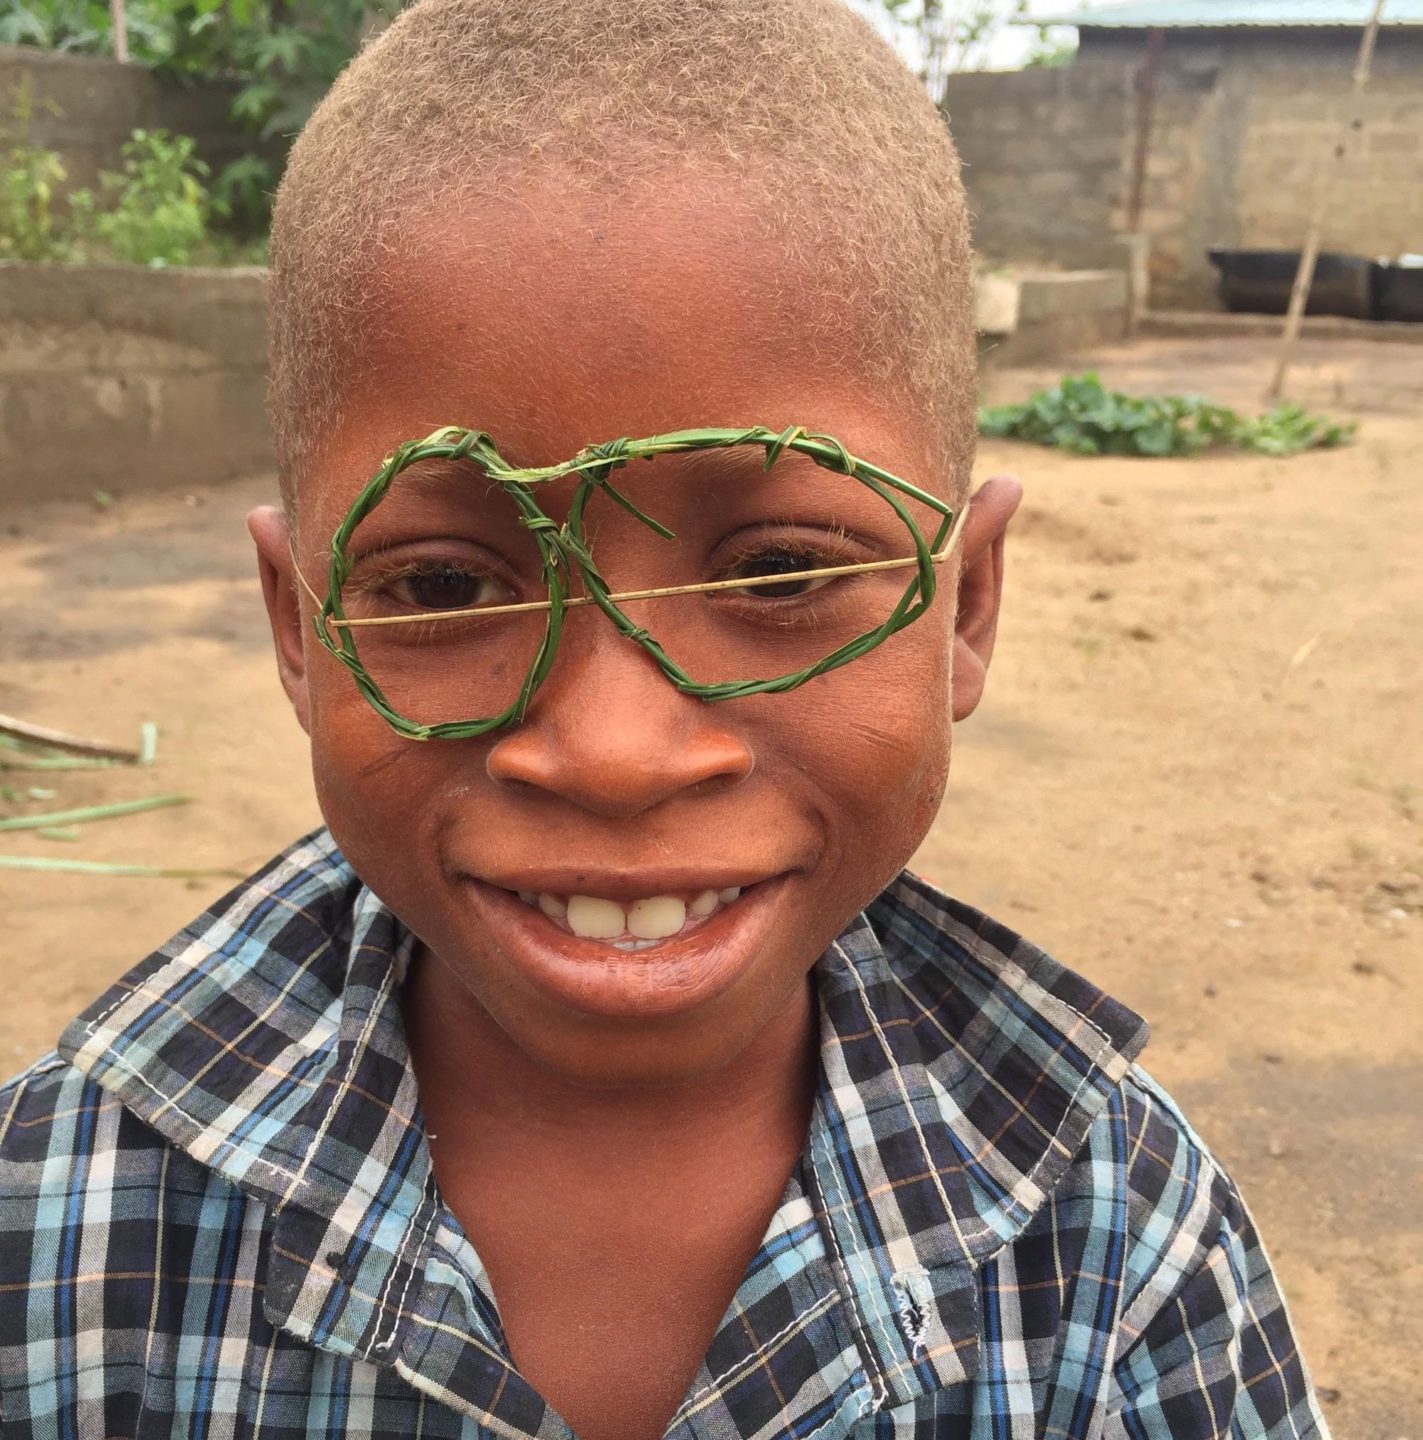 Corrective eye glasses help African children at school